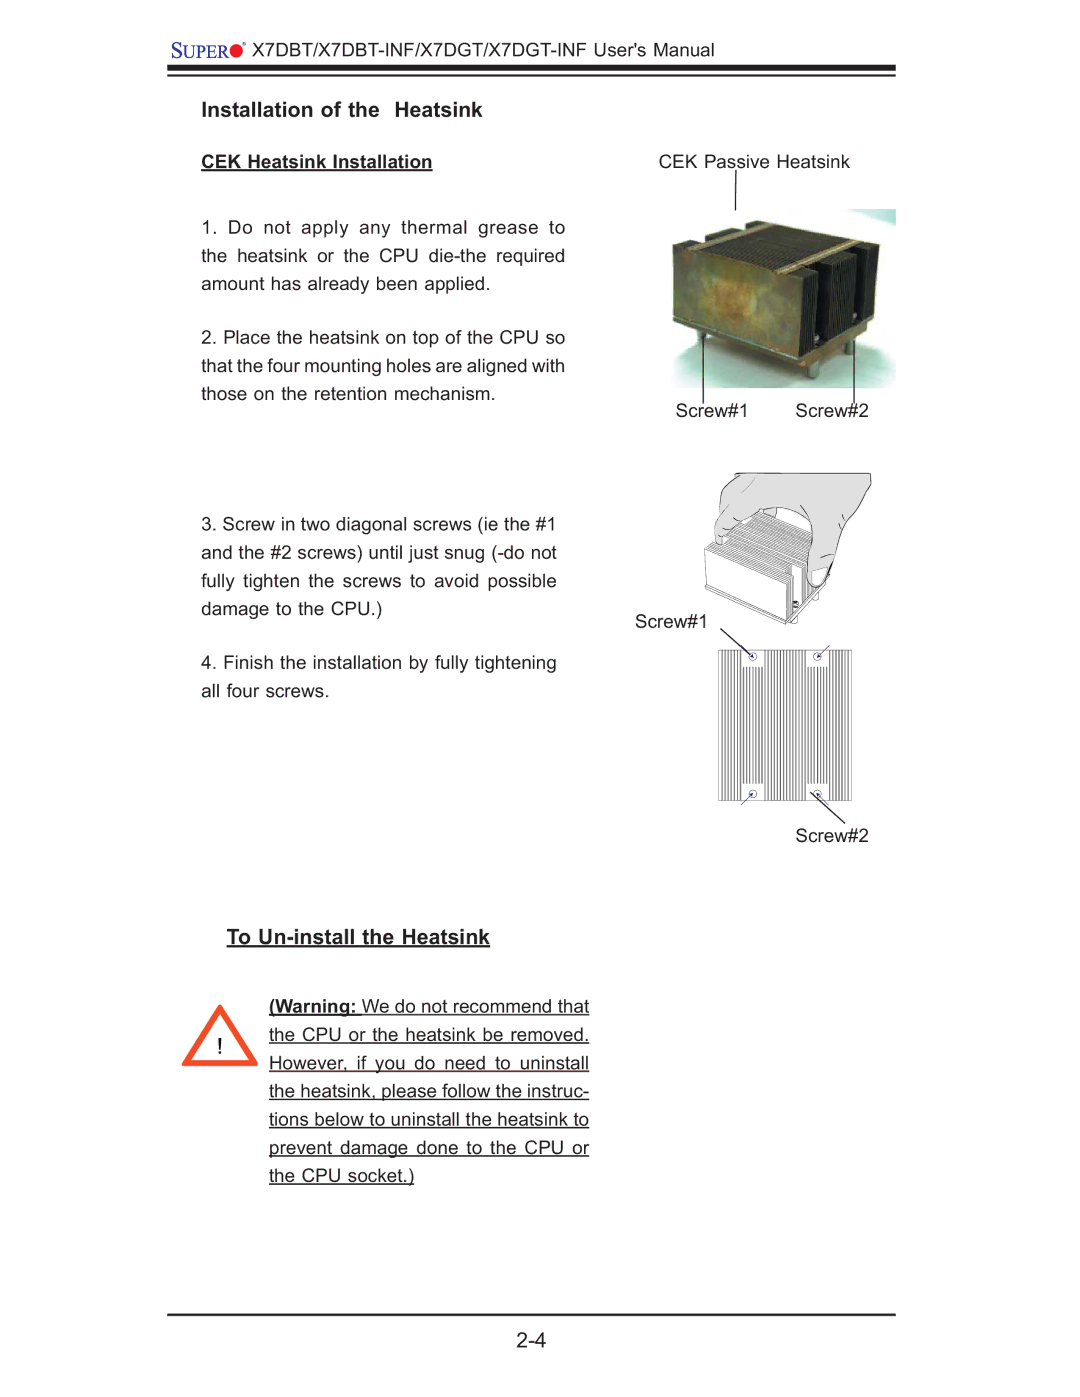 SUPER MICRO Computer XDGT, X7DGT-INF, X7DBT-INF user manual Installation of the Heatsink, To Un-install the Heatsink 